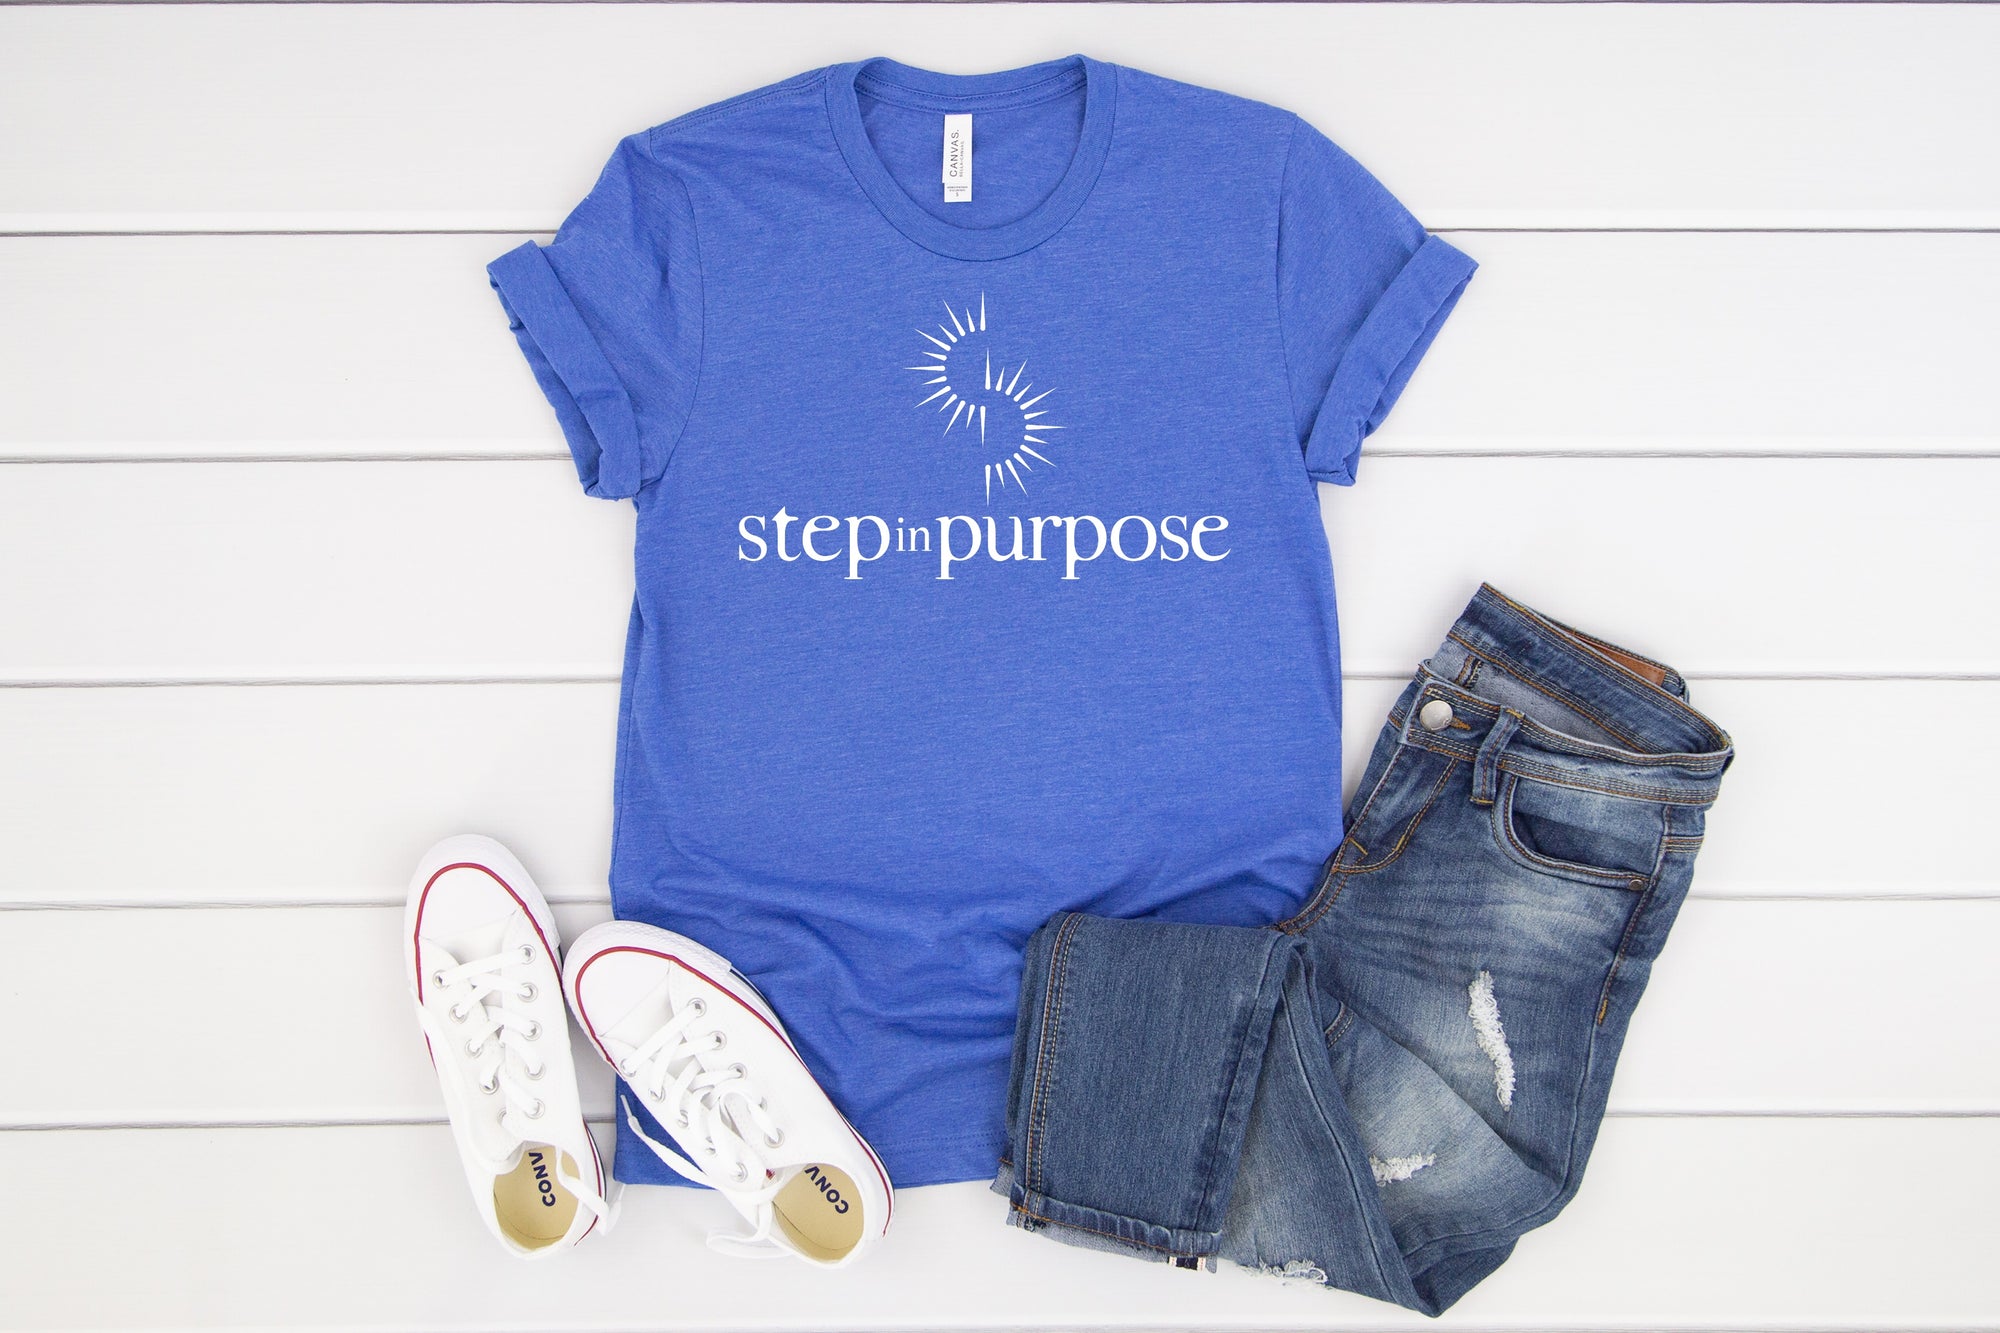 Women's Step In Purpose logo T-shirt